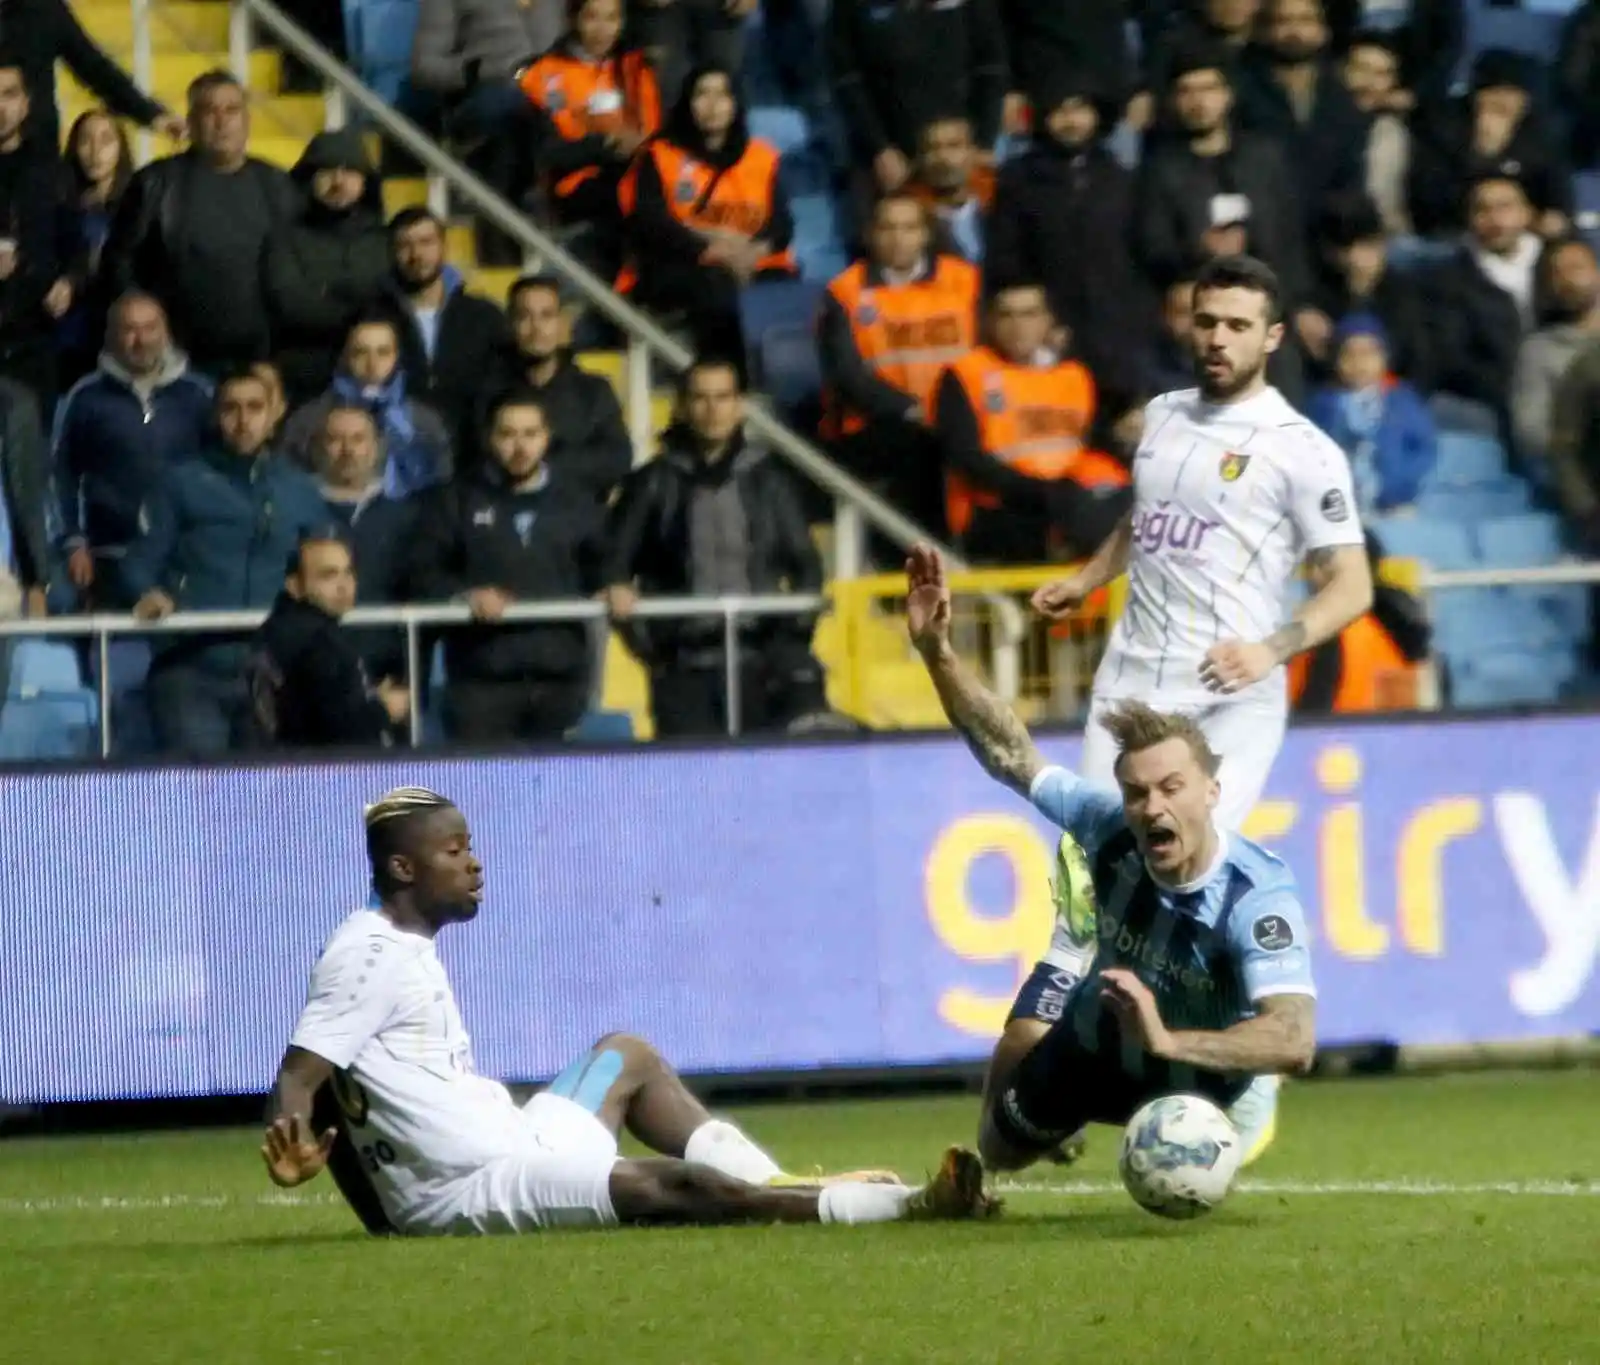 Spor Toto Süper Lig: Adana Demirspor: 6 - İstanbulspor: 0 (Maç sonucu)
